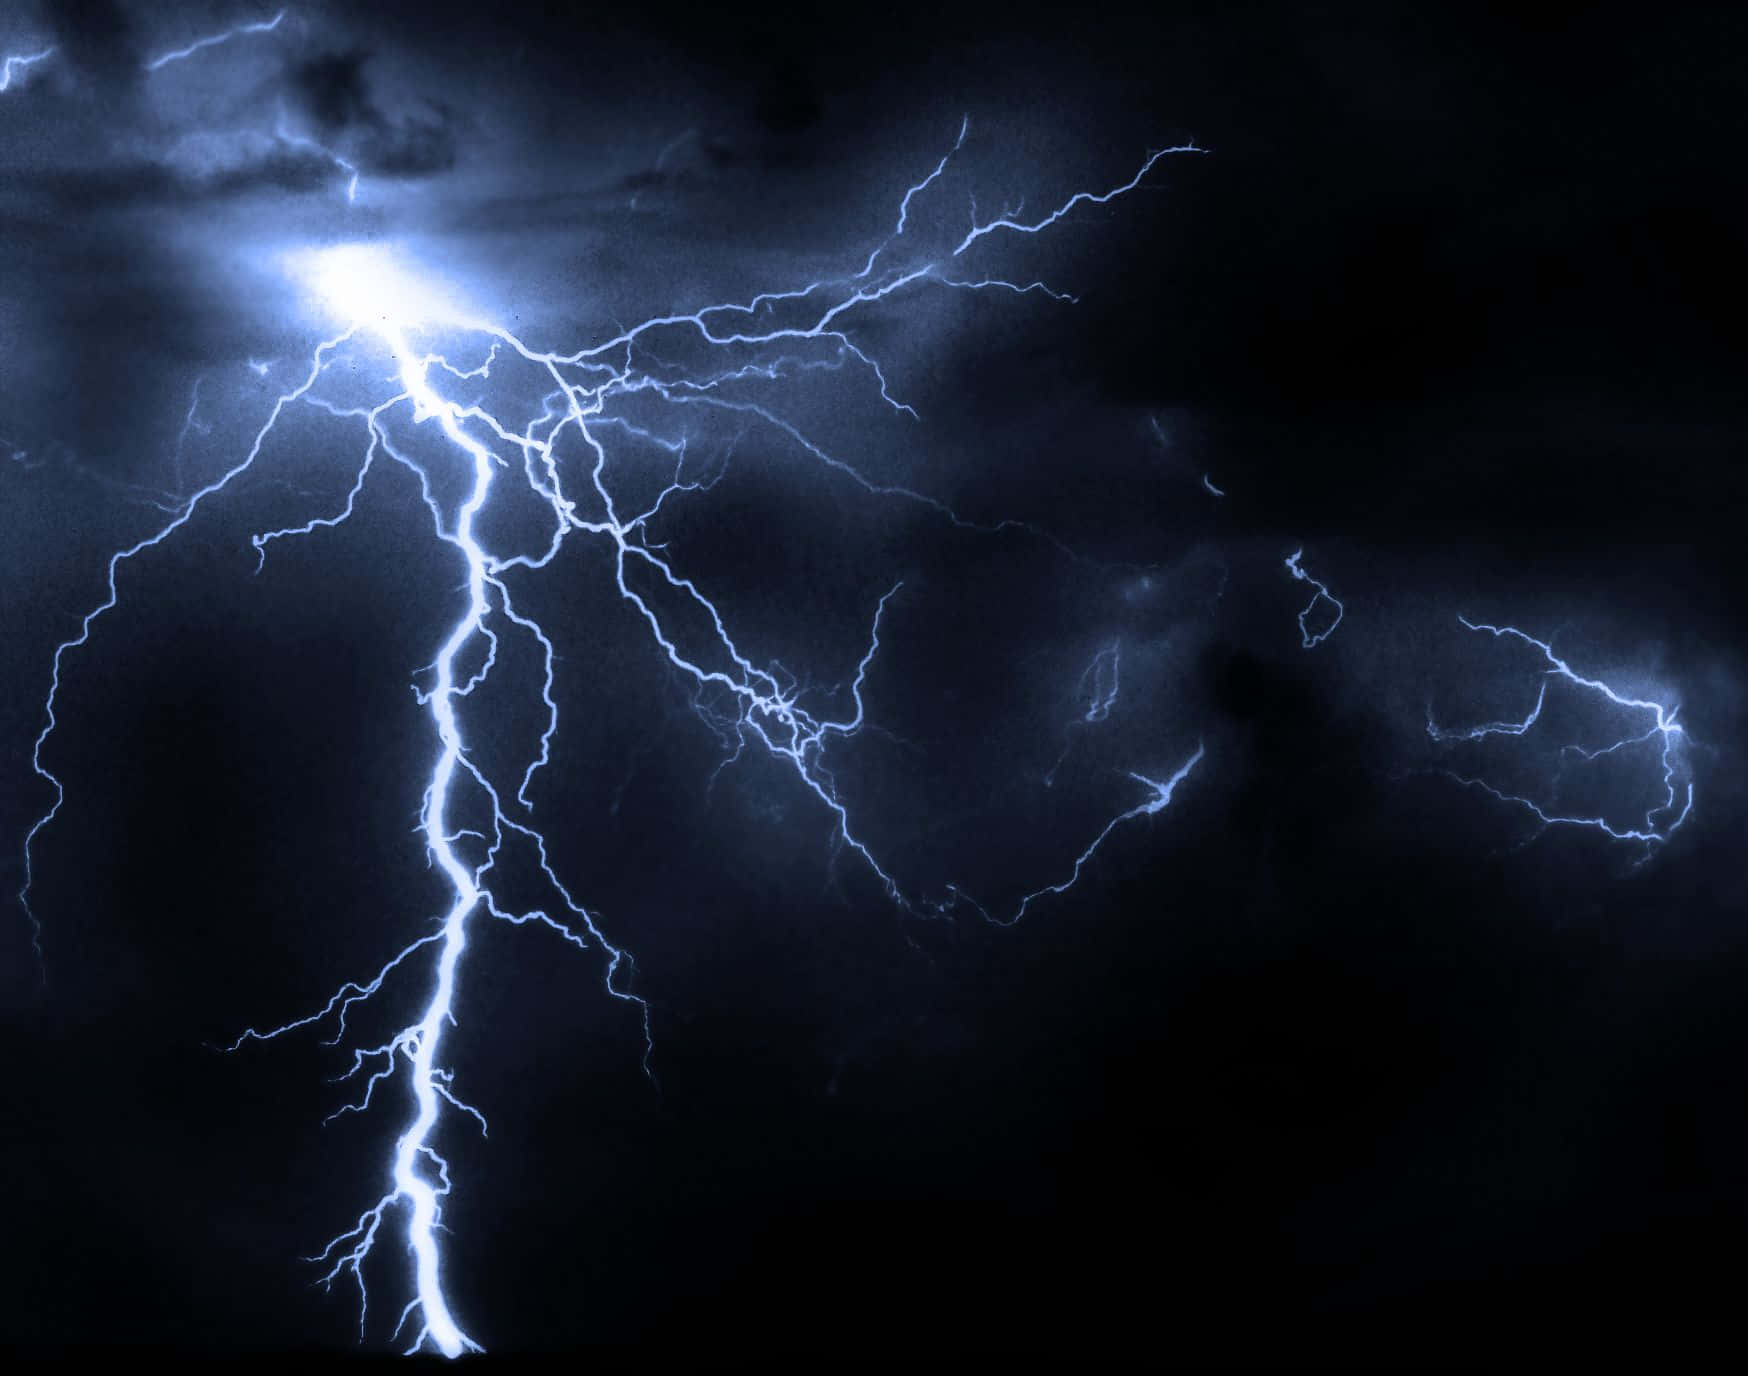 Electric Blues - A Mesmerizing Image Of Blue Lightning In A Dark Night Sky